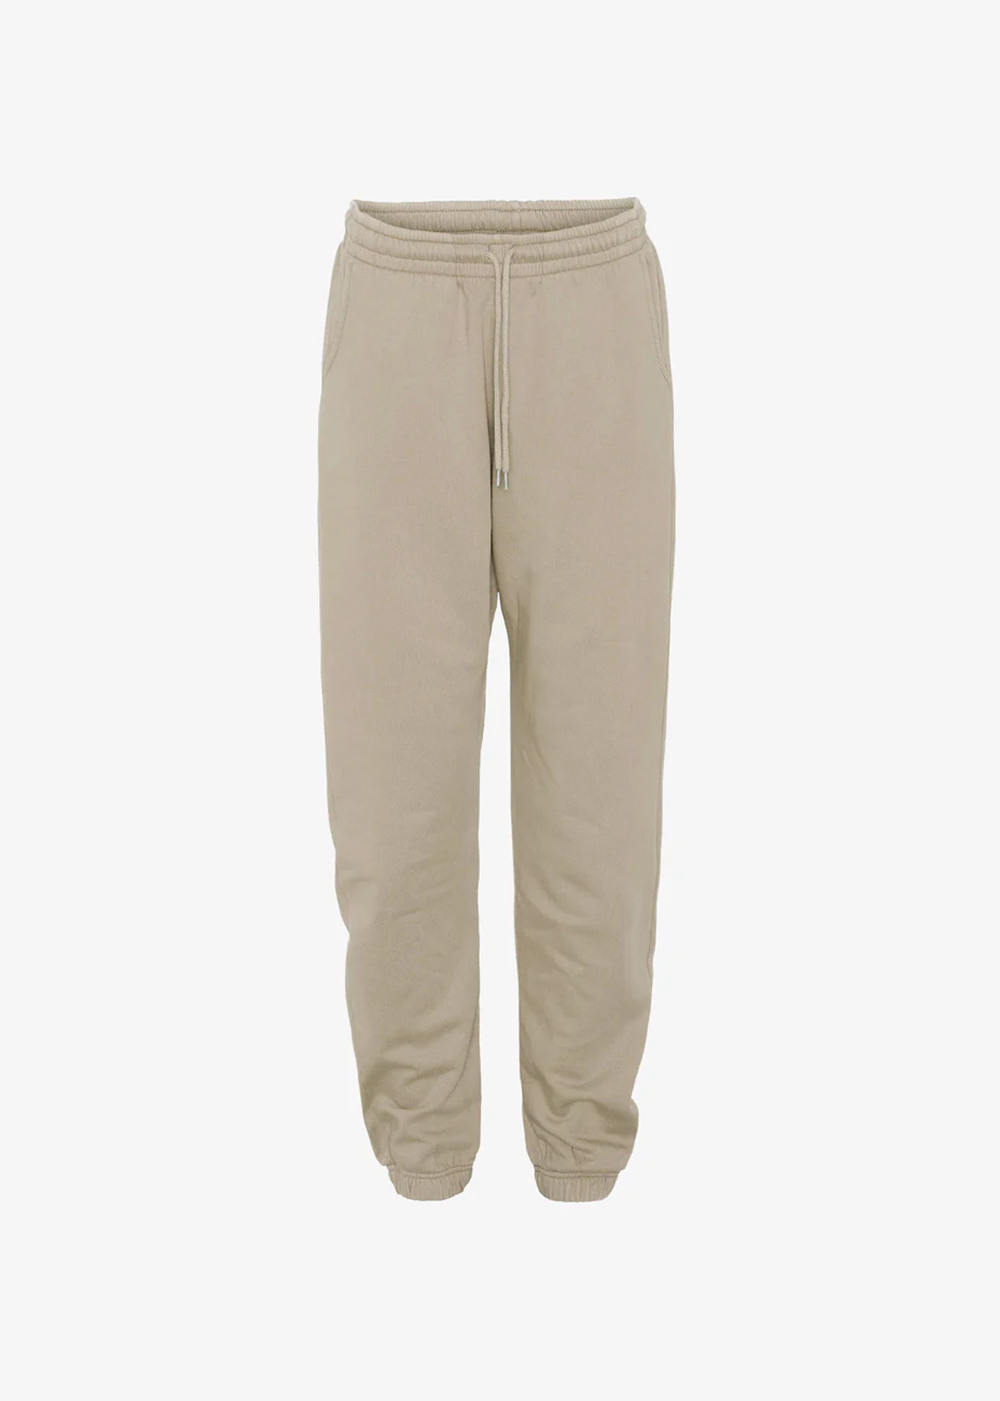 Organic Sweatpants - Oyster Grey - Colorful Standard Canada - Danali